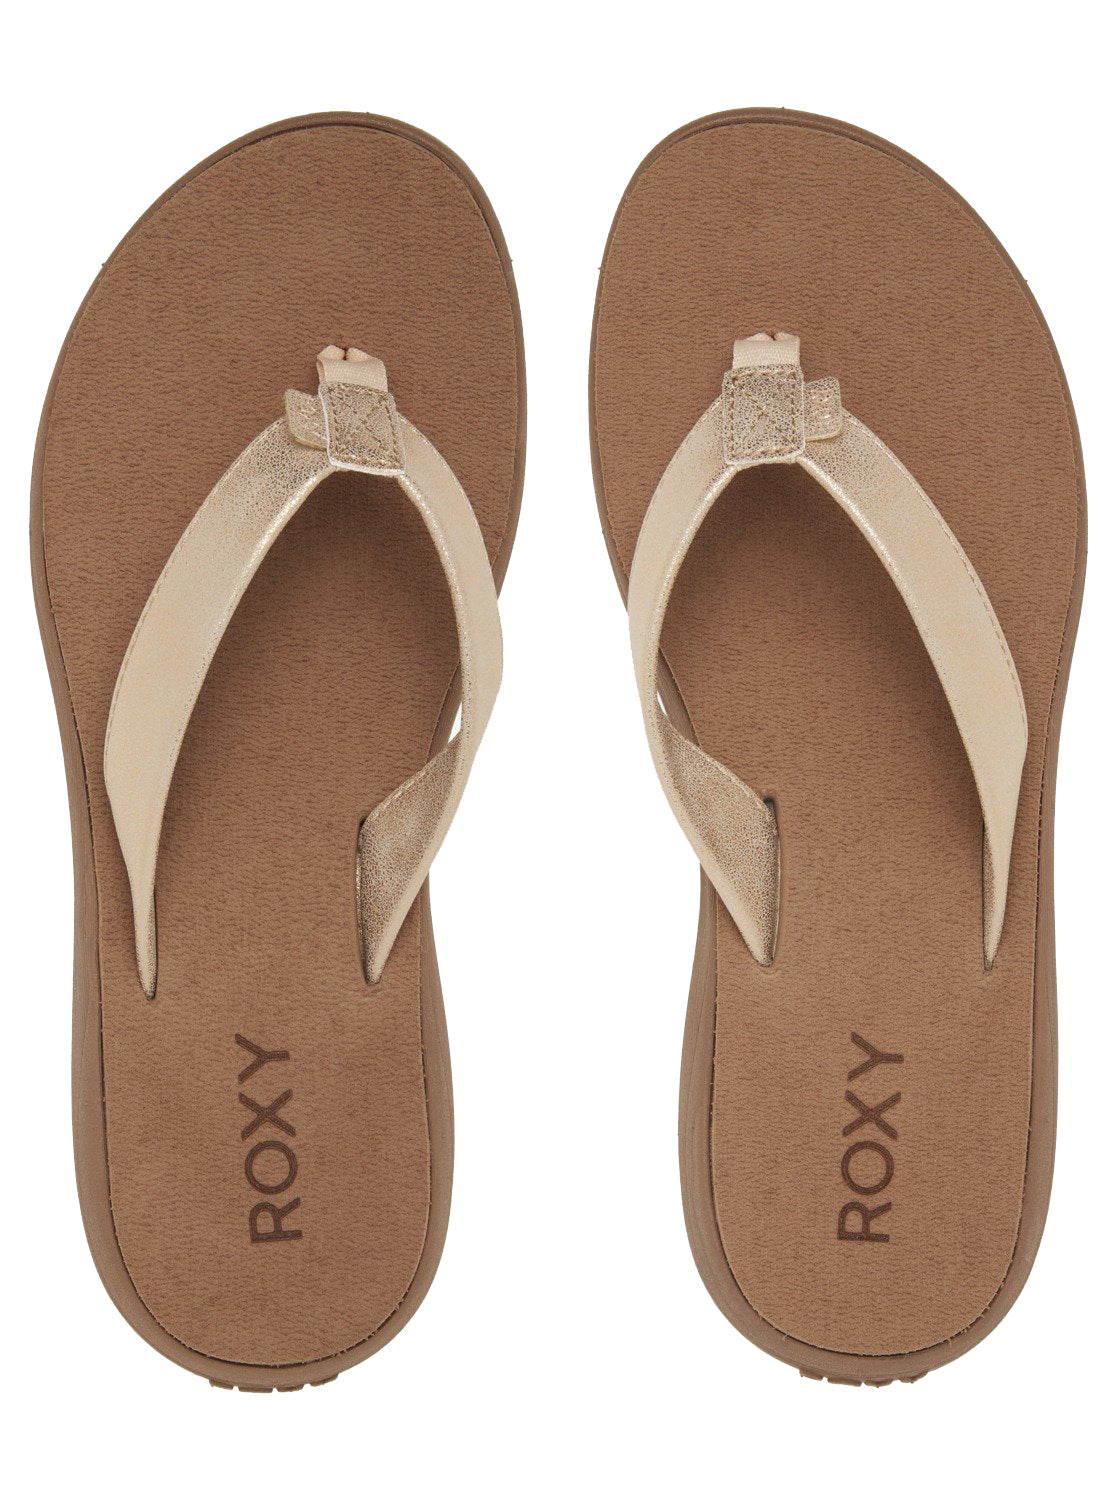 Roxy Lizzie Womens Sandal BRO-Bronze 11